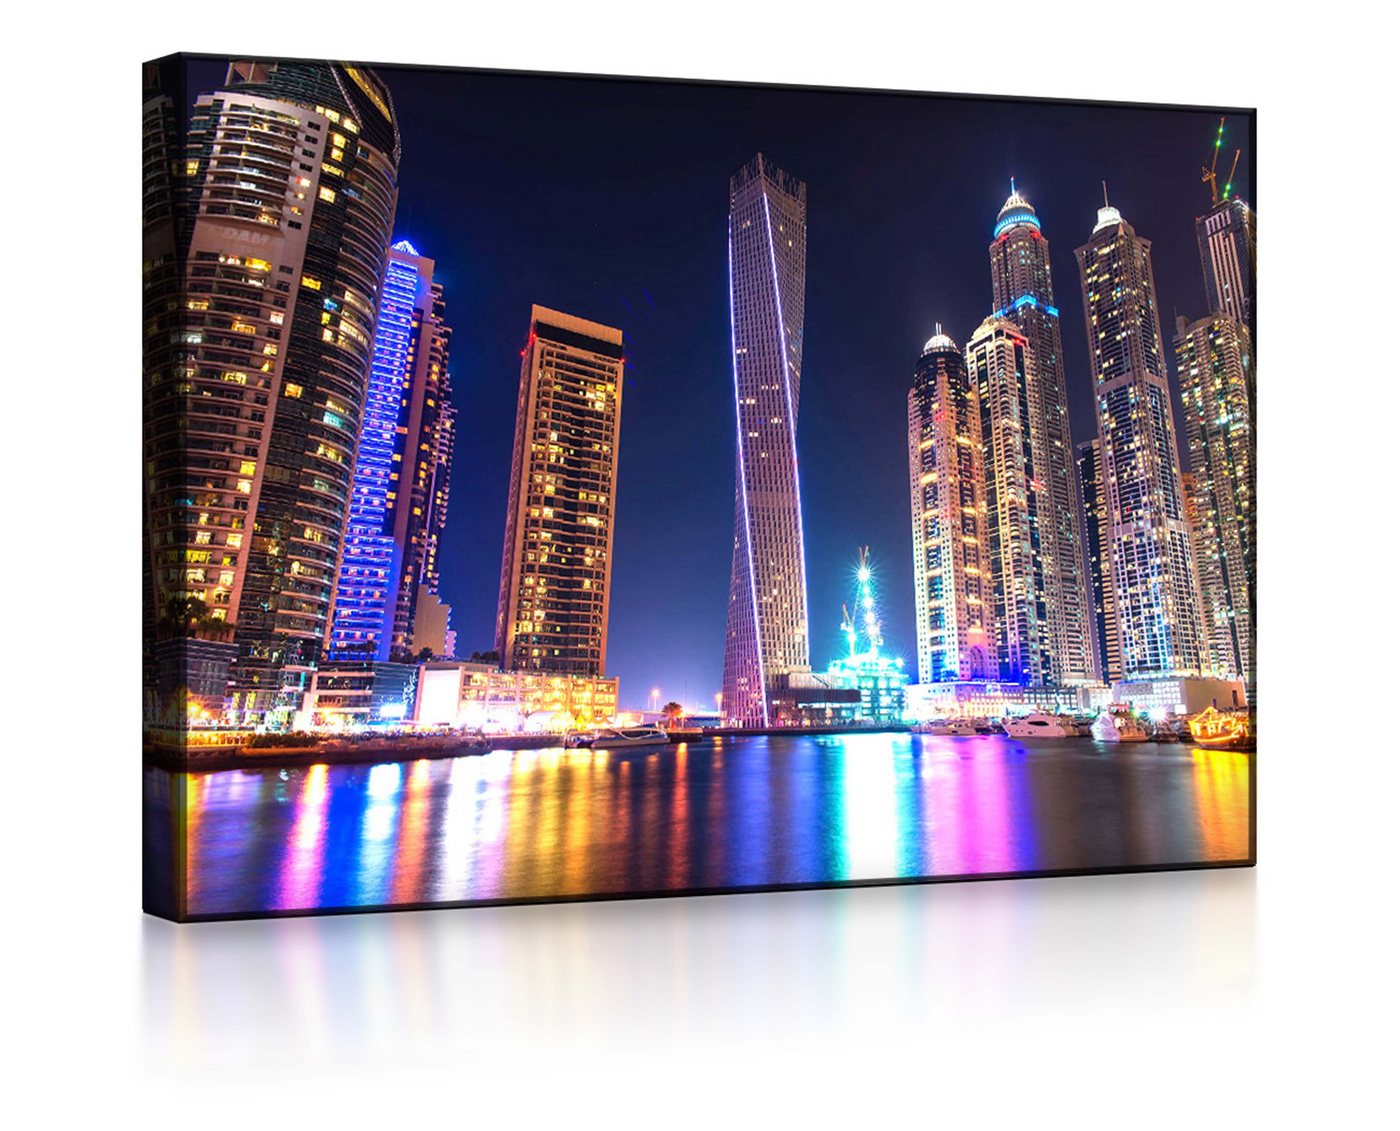 lightbox-multicolor LED-Bild Dubai Skyline mit Cayan Tower front lighted / 60x40cm, Leuchtbild mit Fernbedienung von lightbox-multicolor